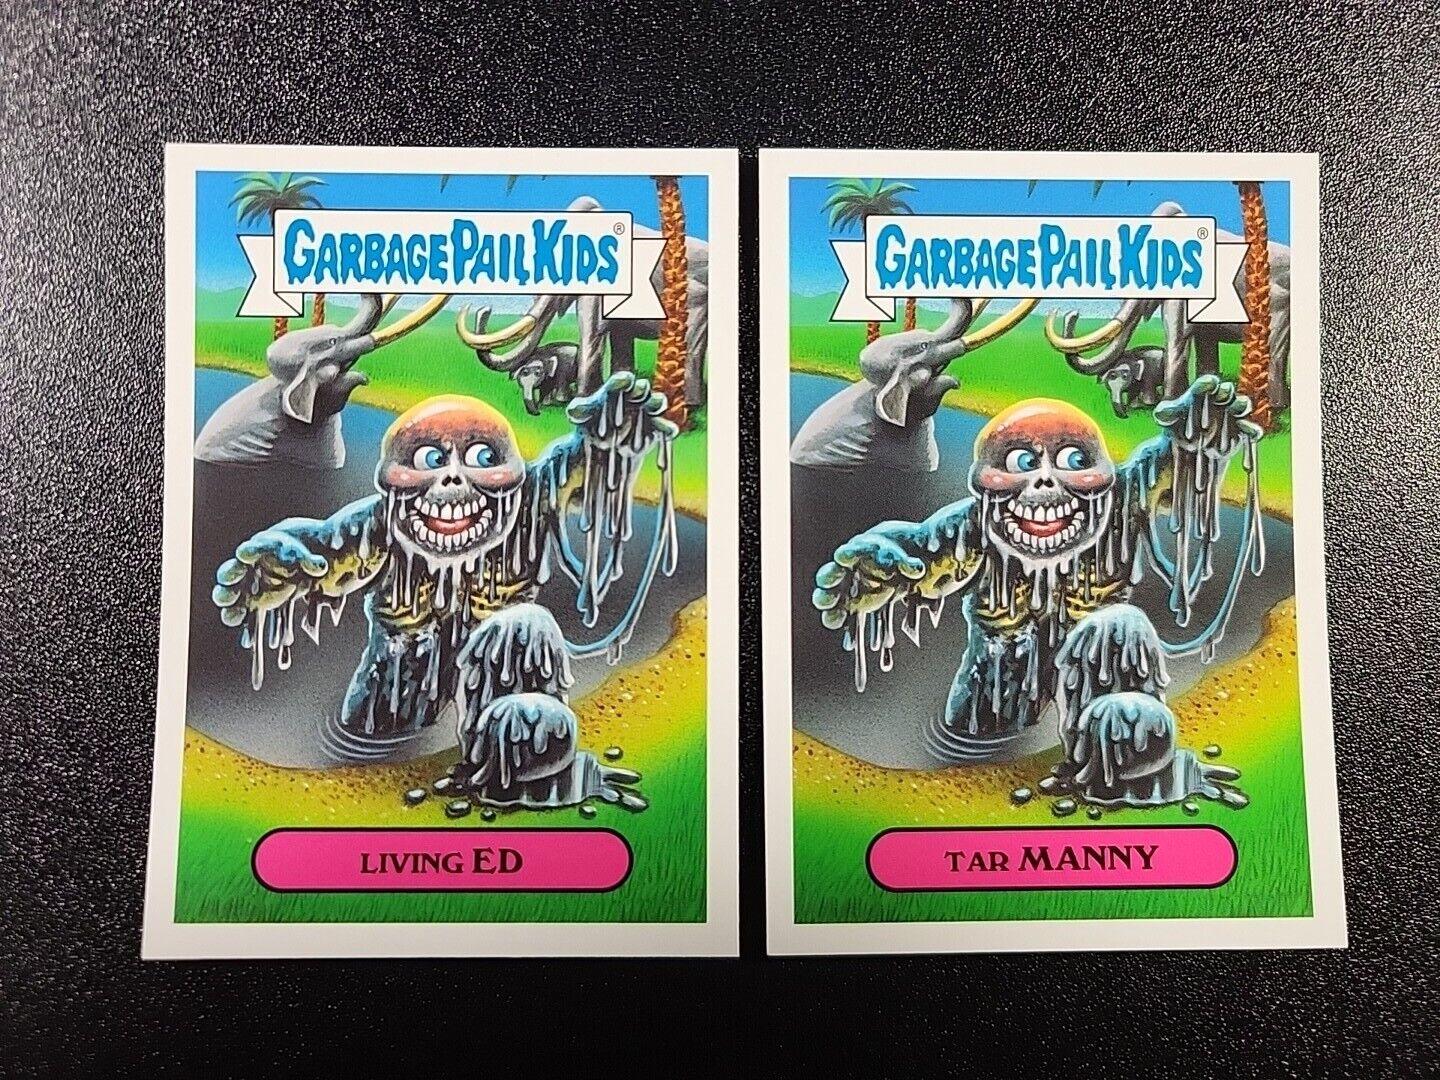 Return of the Living Dead Tarman Spoof Garbage Pail Kids 2 Card Set